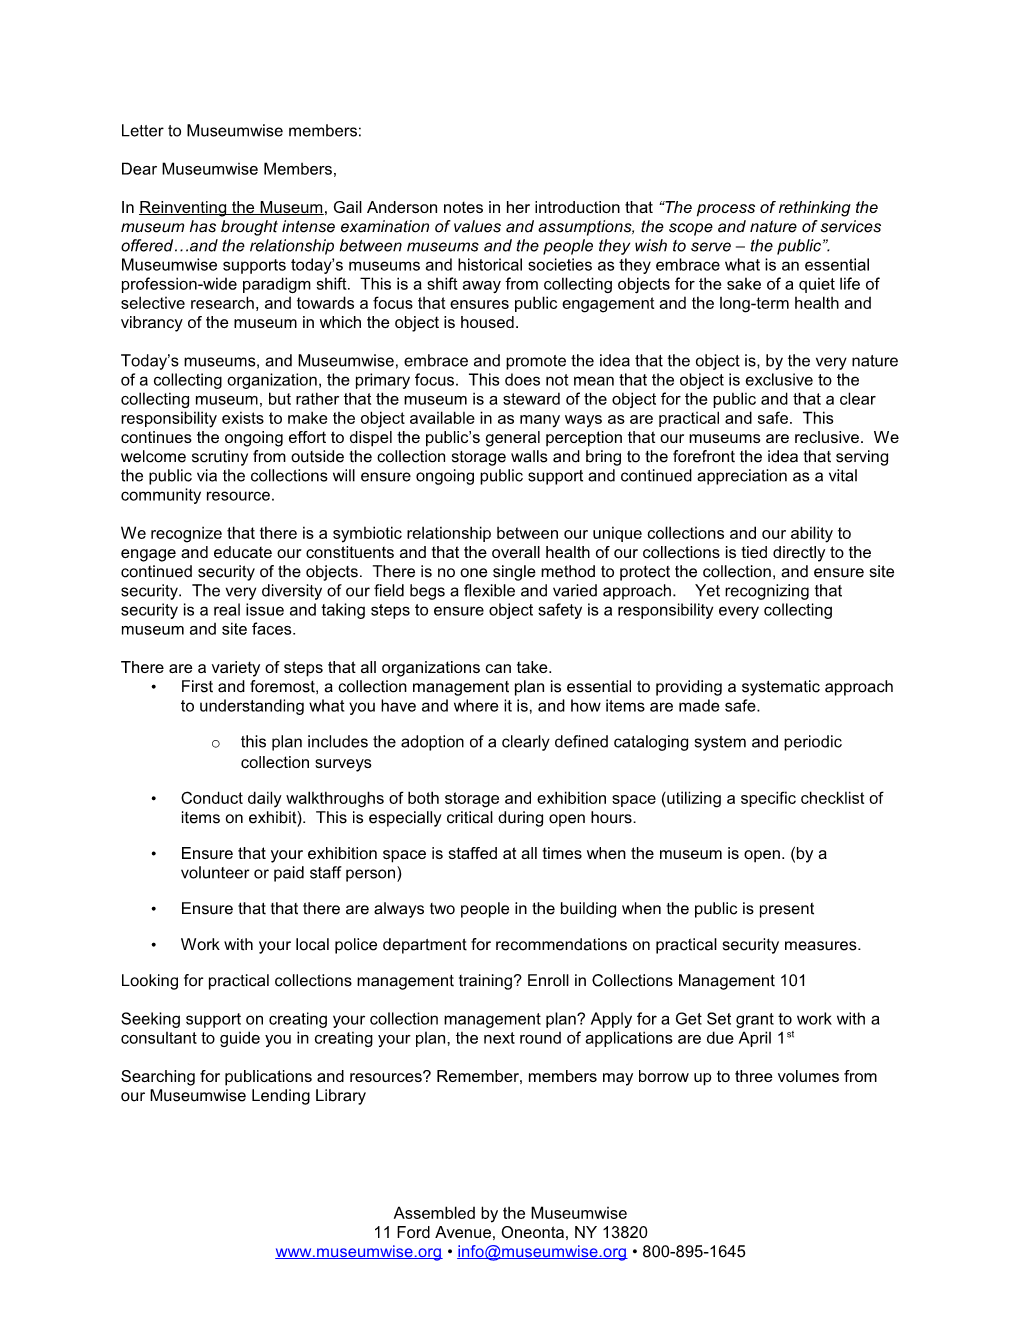 Letter to UHA Members